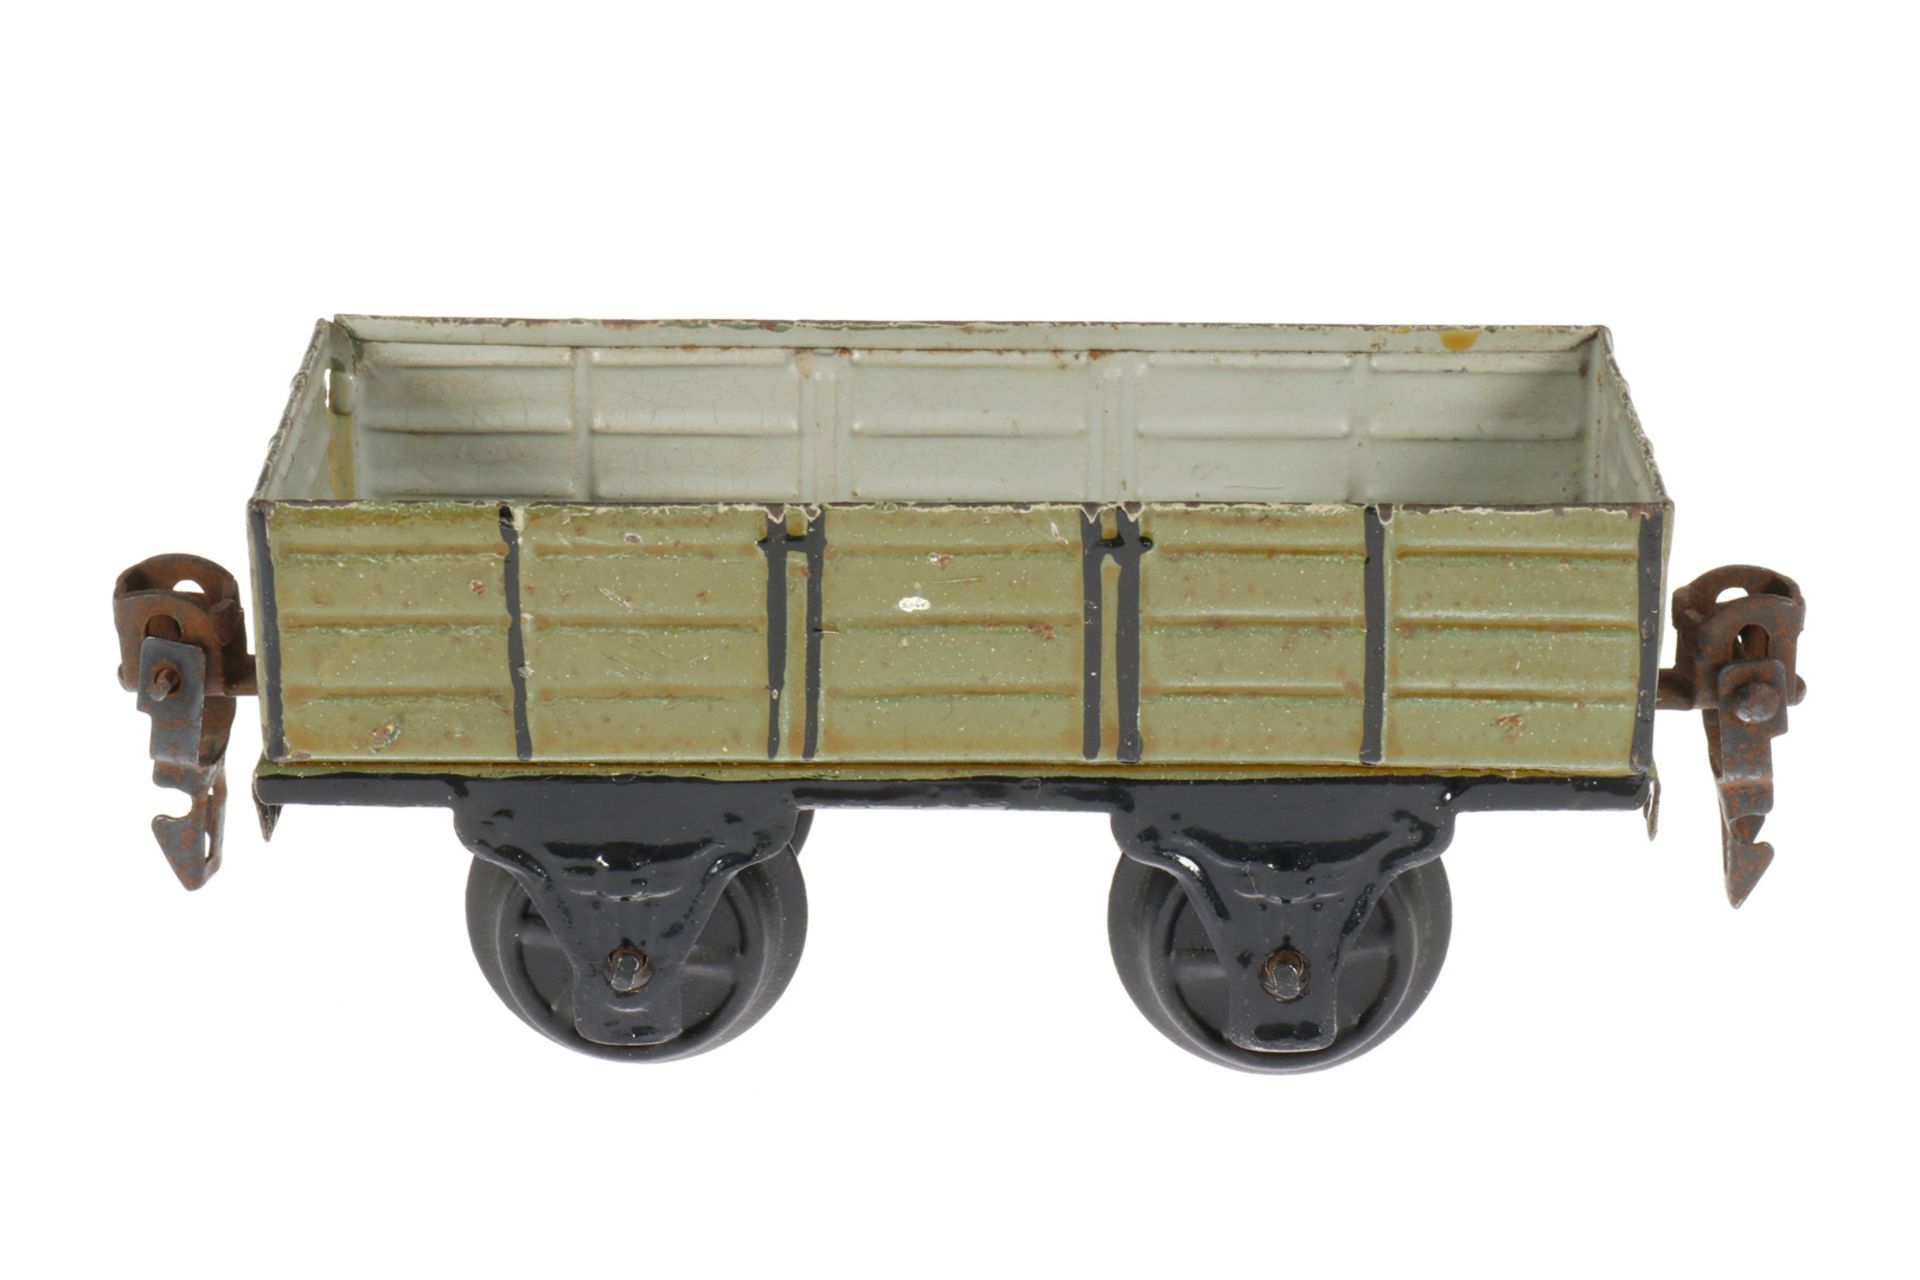 Märklin offener Güterwagen 1916, S 0, handlackiert, Alterungsspuren, L 11, Z 2